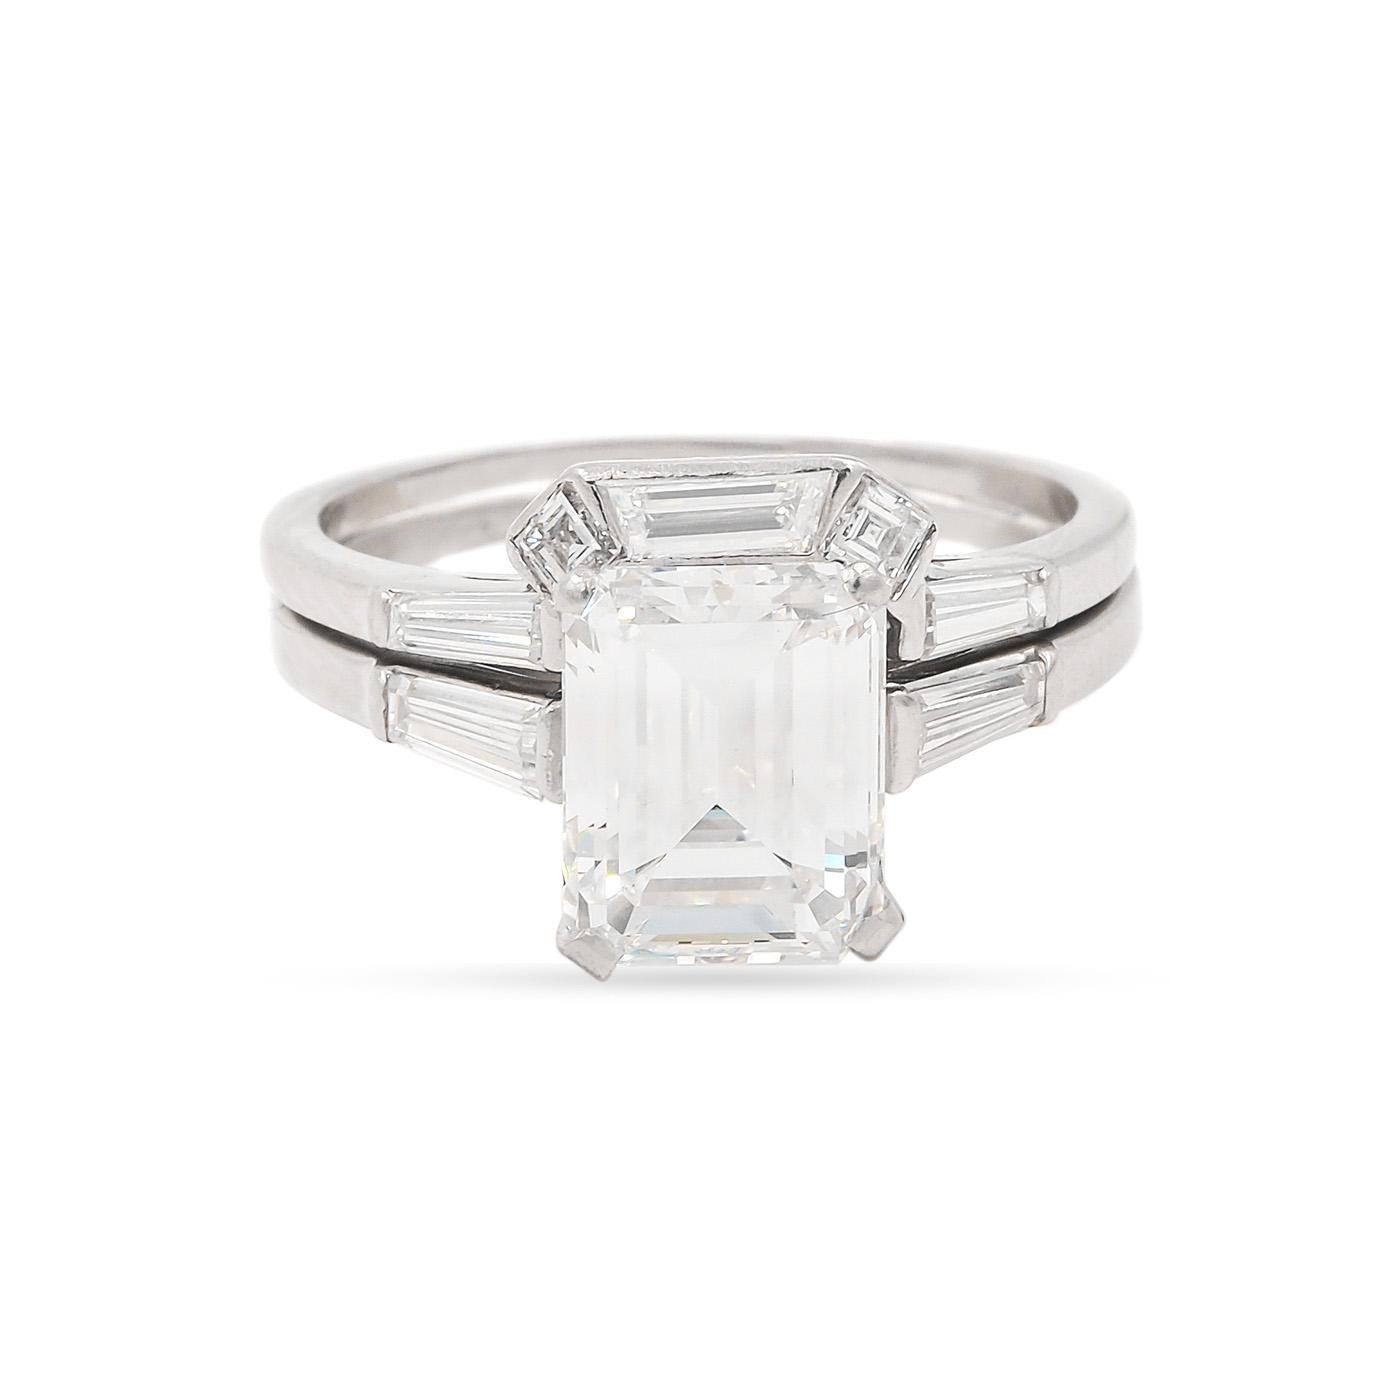 Modern Mid-Century 2.55 Carat GIA D Color & VS1 Emerald Cut Diamond Engagement Ring Set